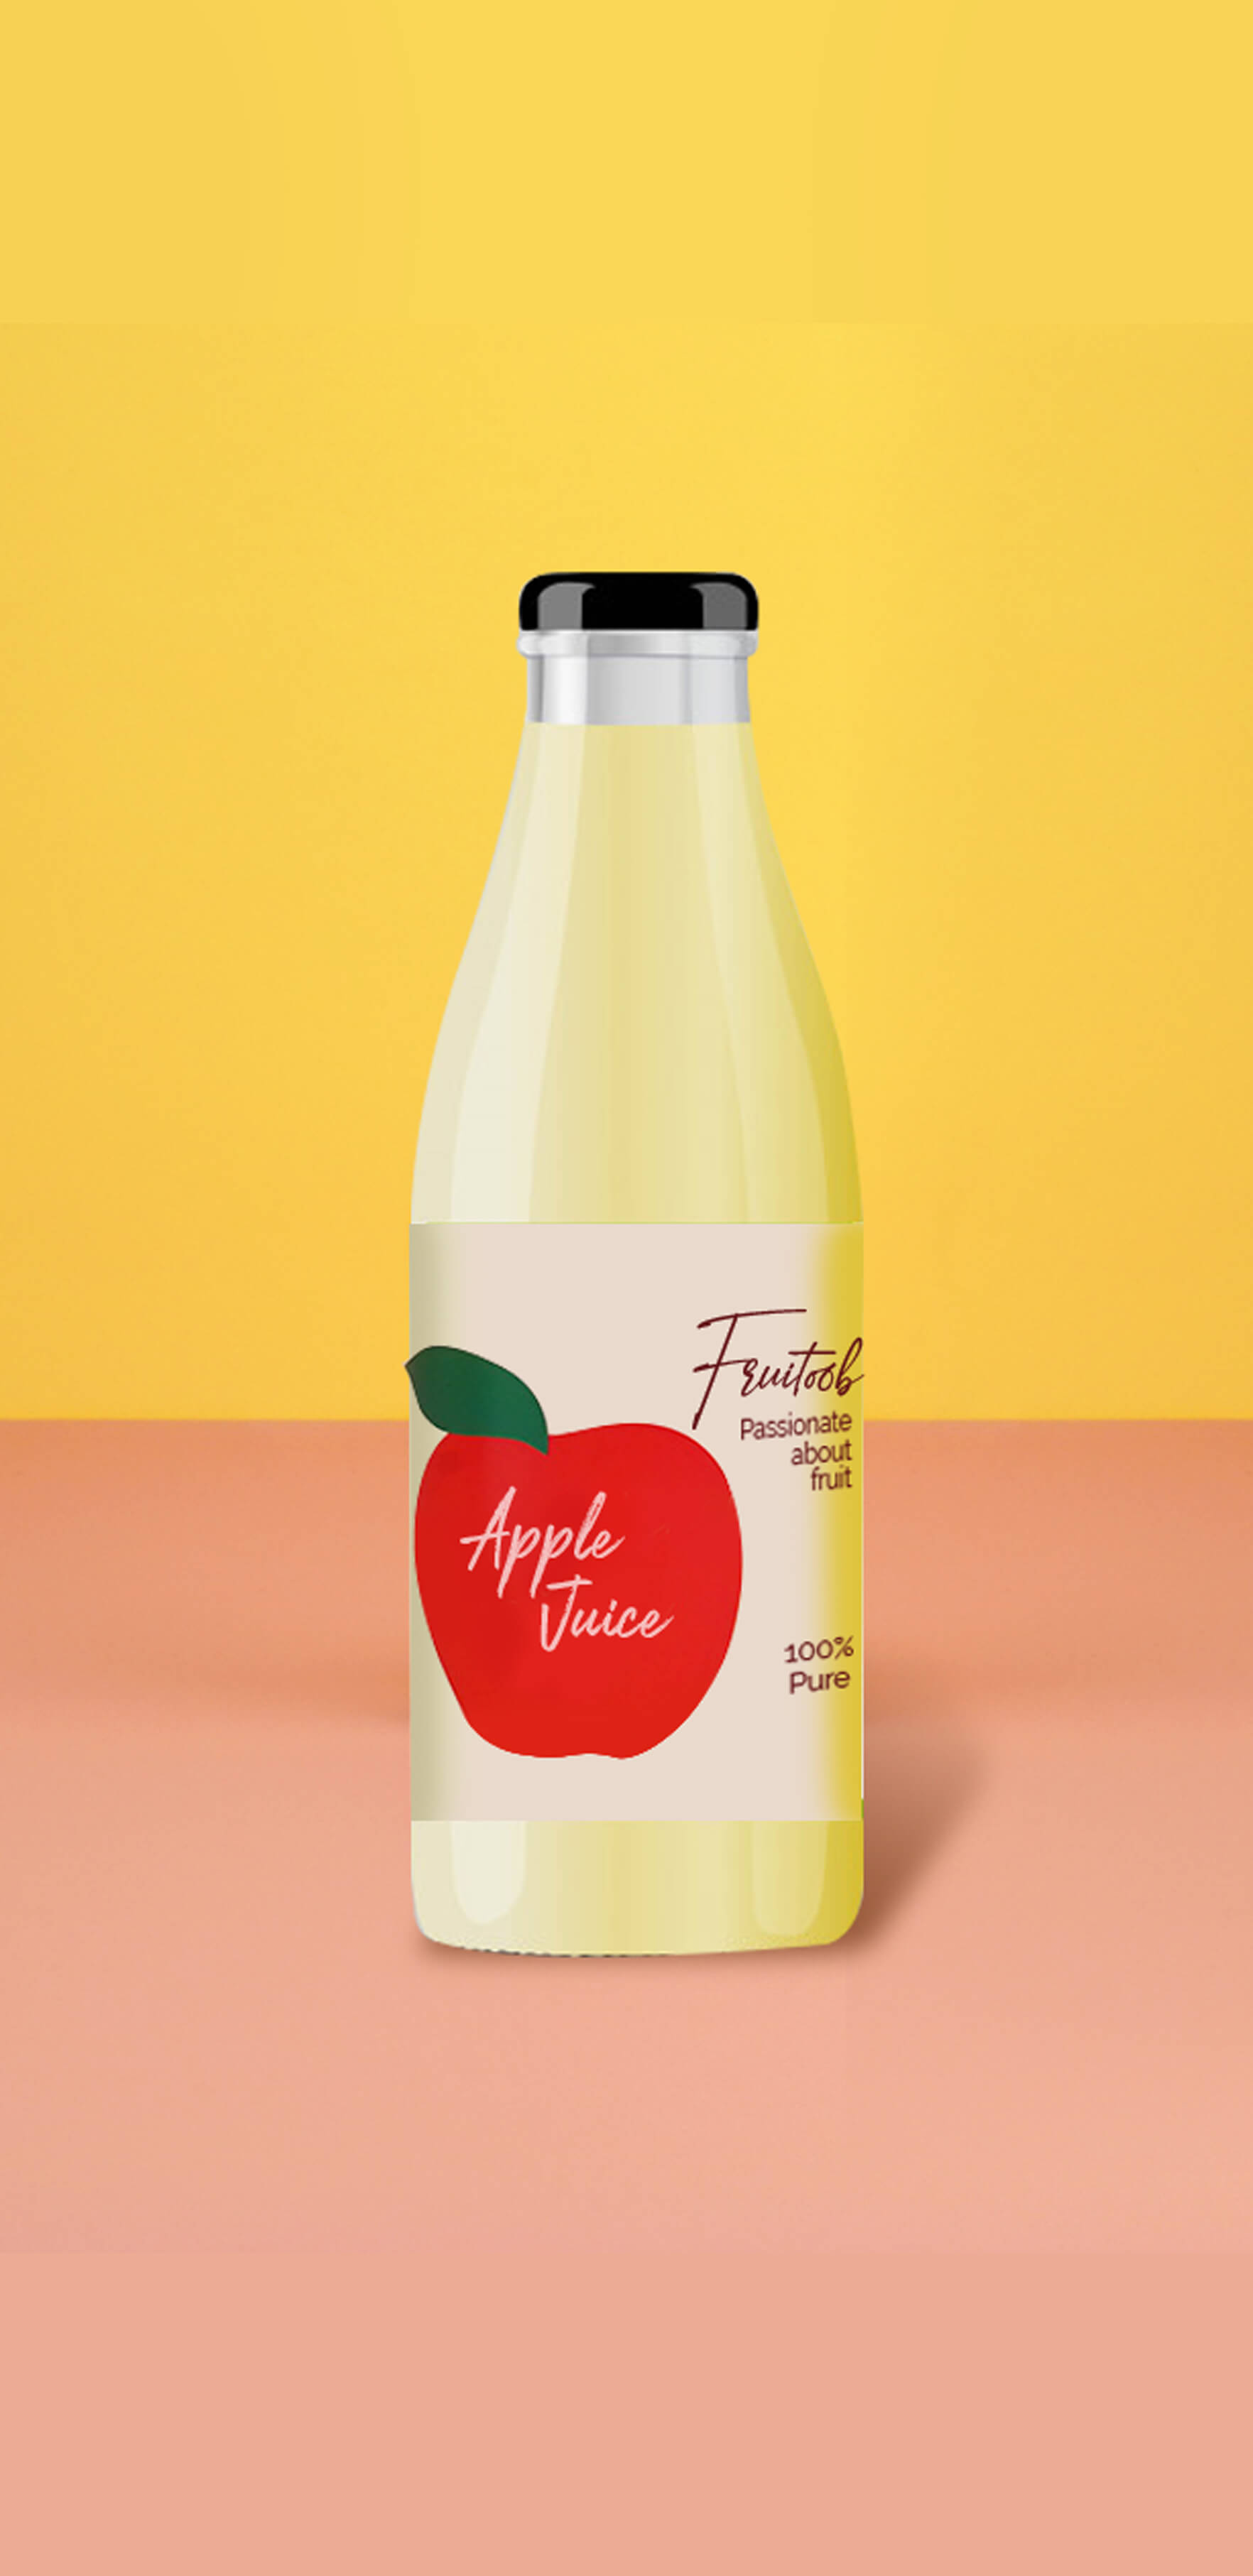 apple juice bottle packaging design